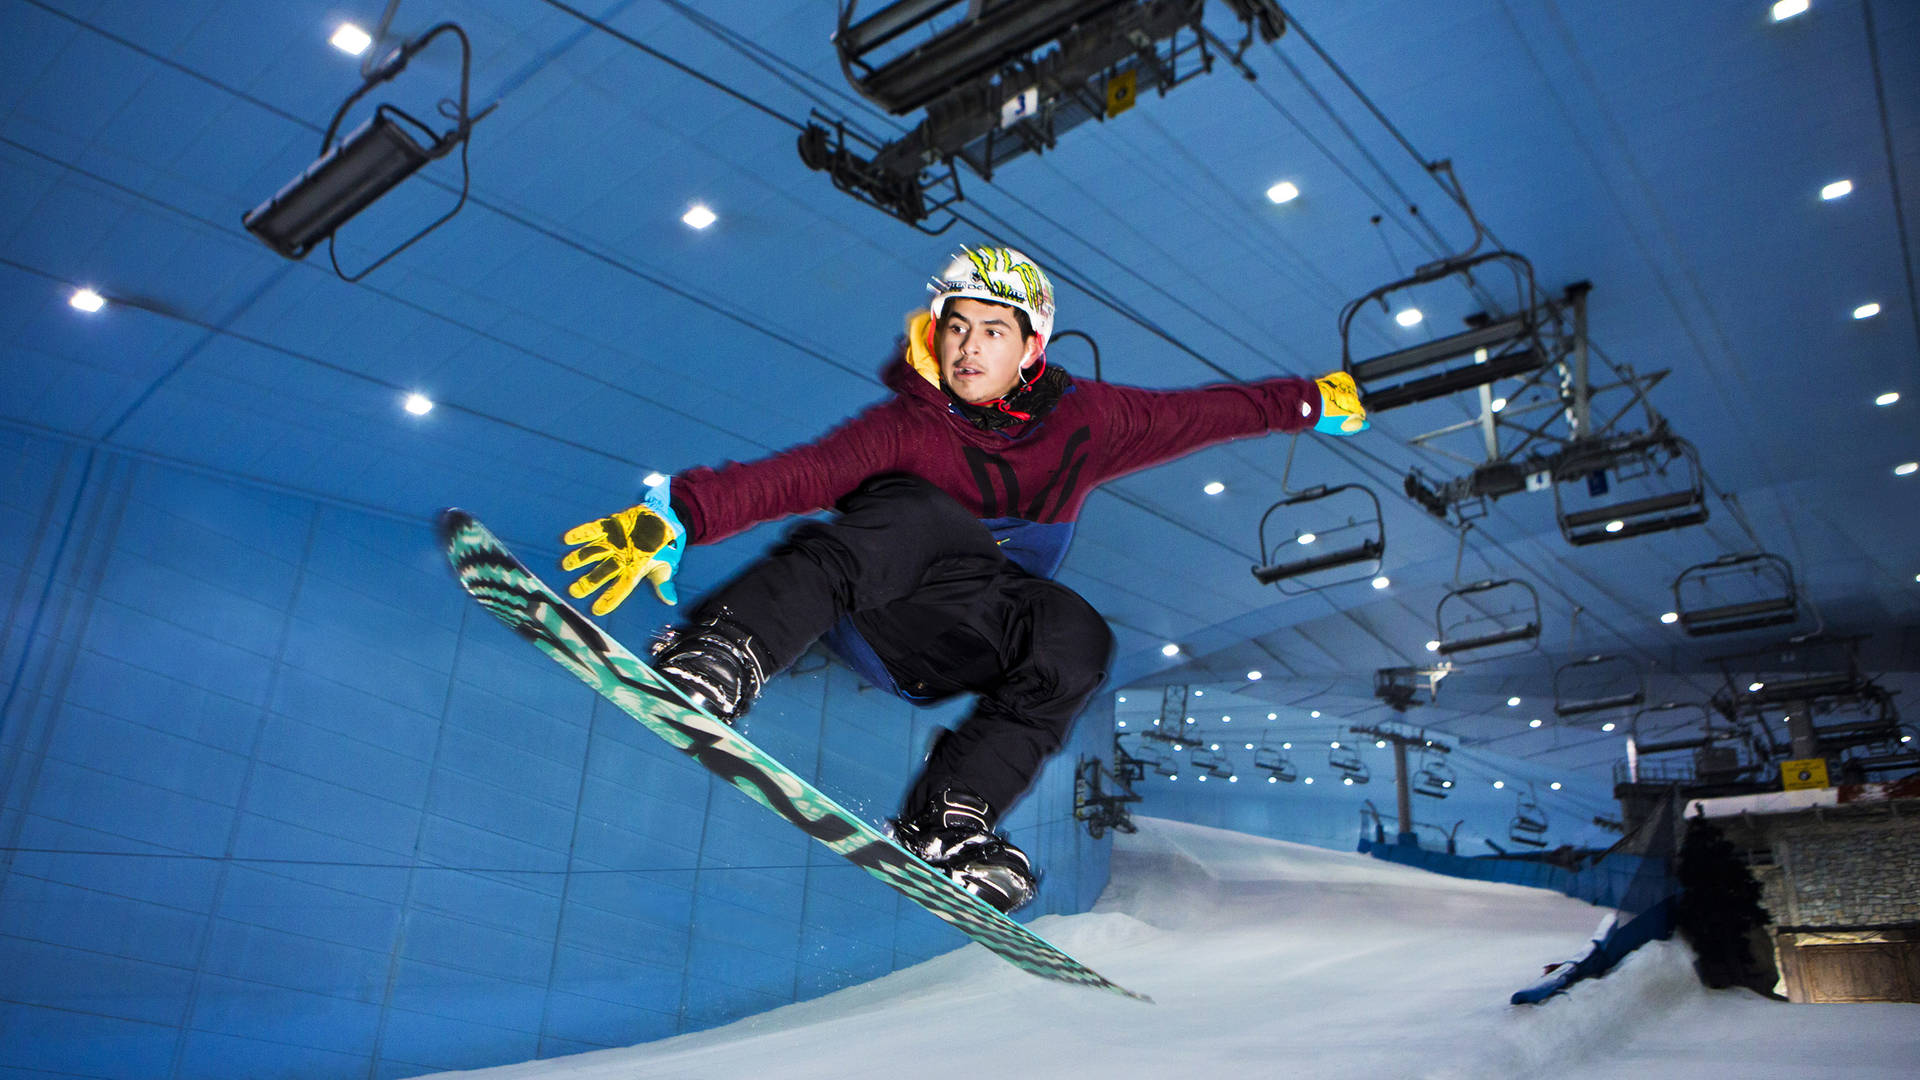 A young boy snowboard's down Ski Dubai's slope